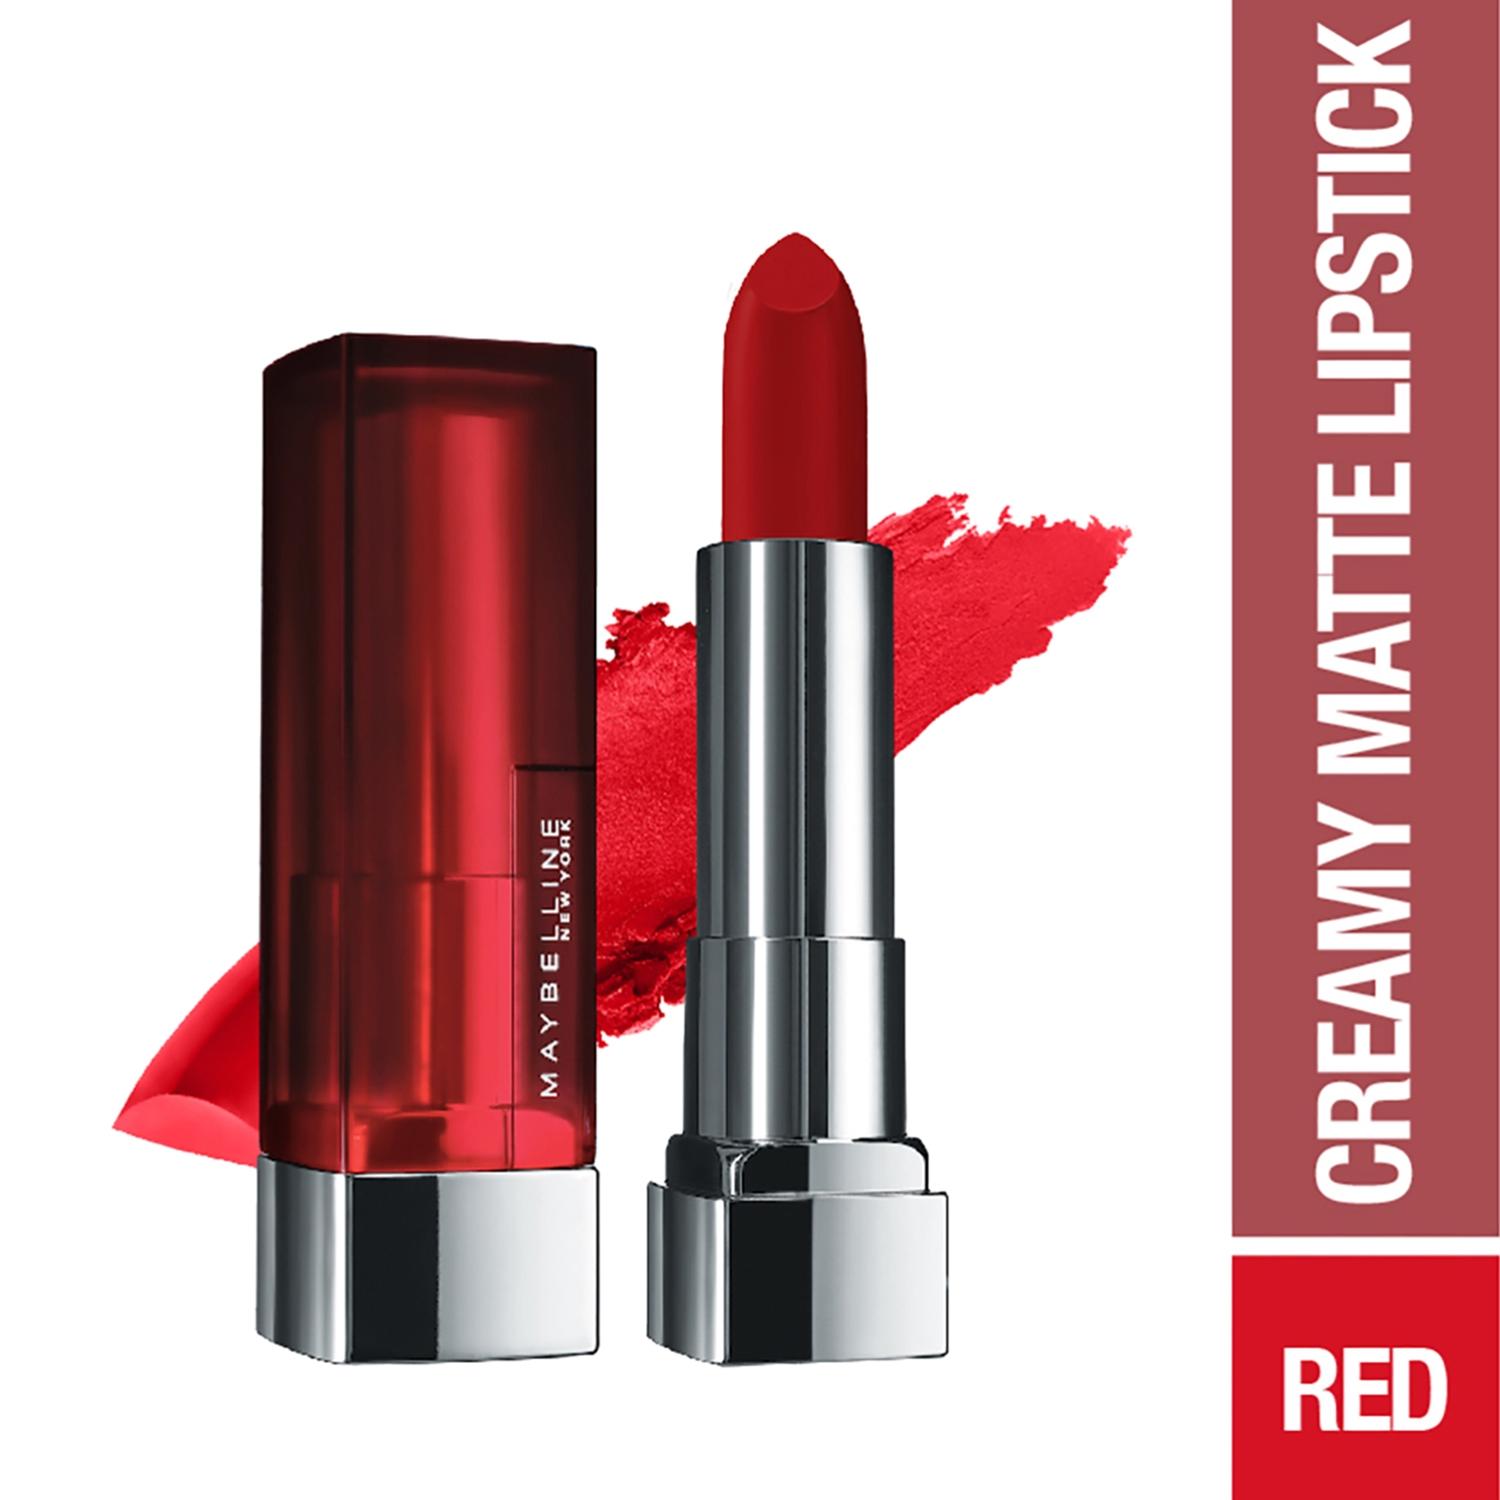 maybelline new york color sensational creamy matte lipstick - 690 siren in scarlet (3.9g)